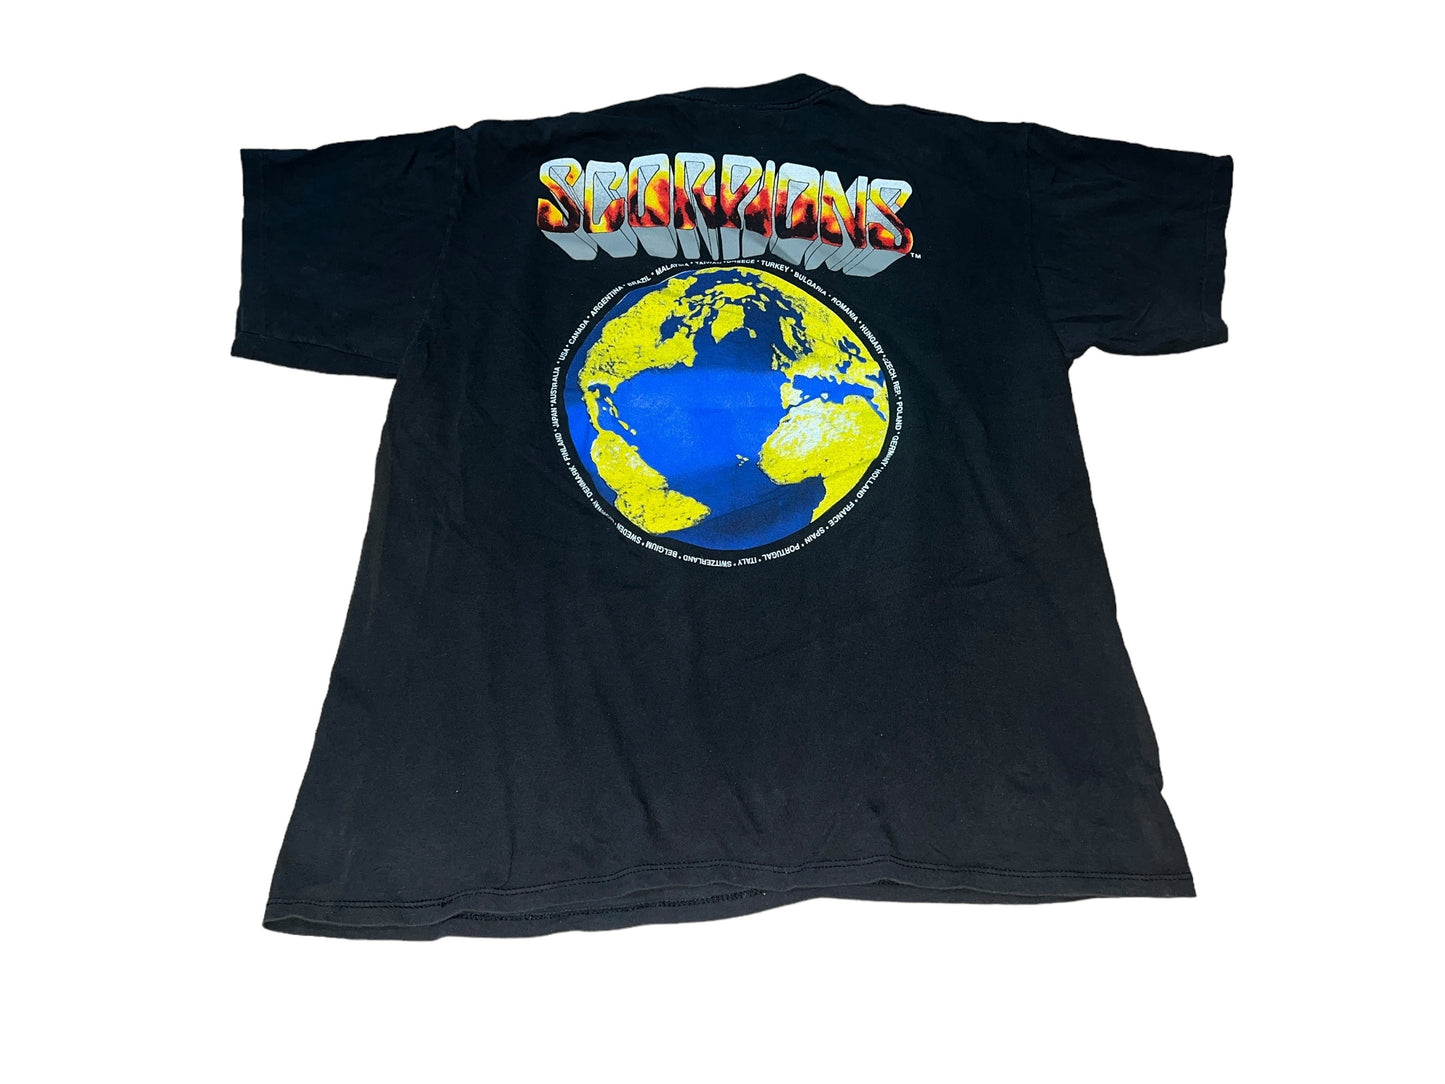 Vintage 90's Scorpions T-Shirt